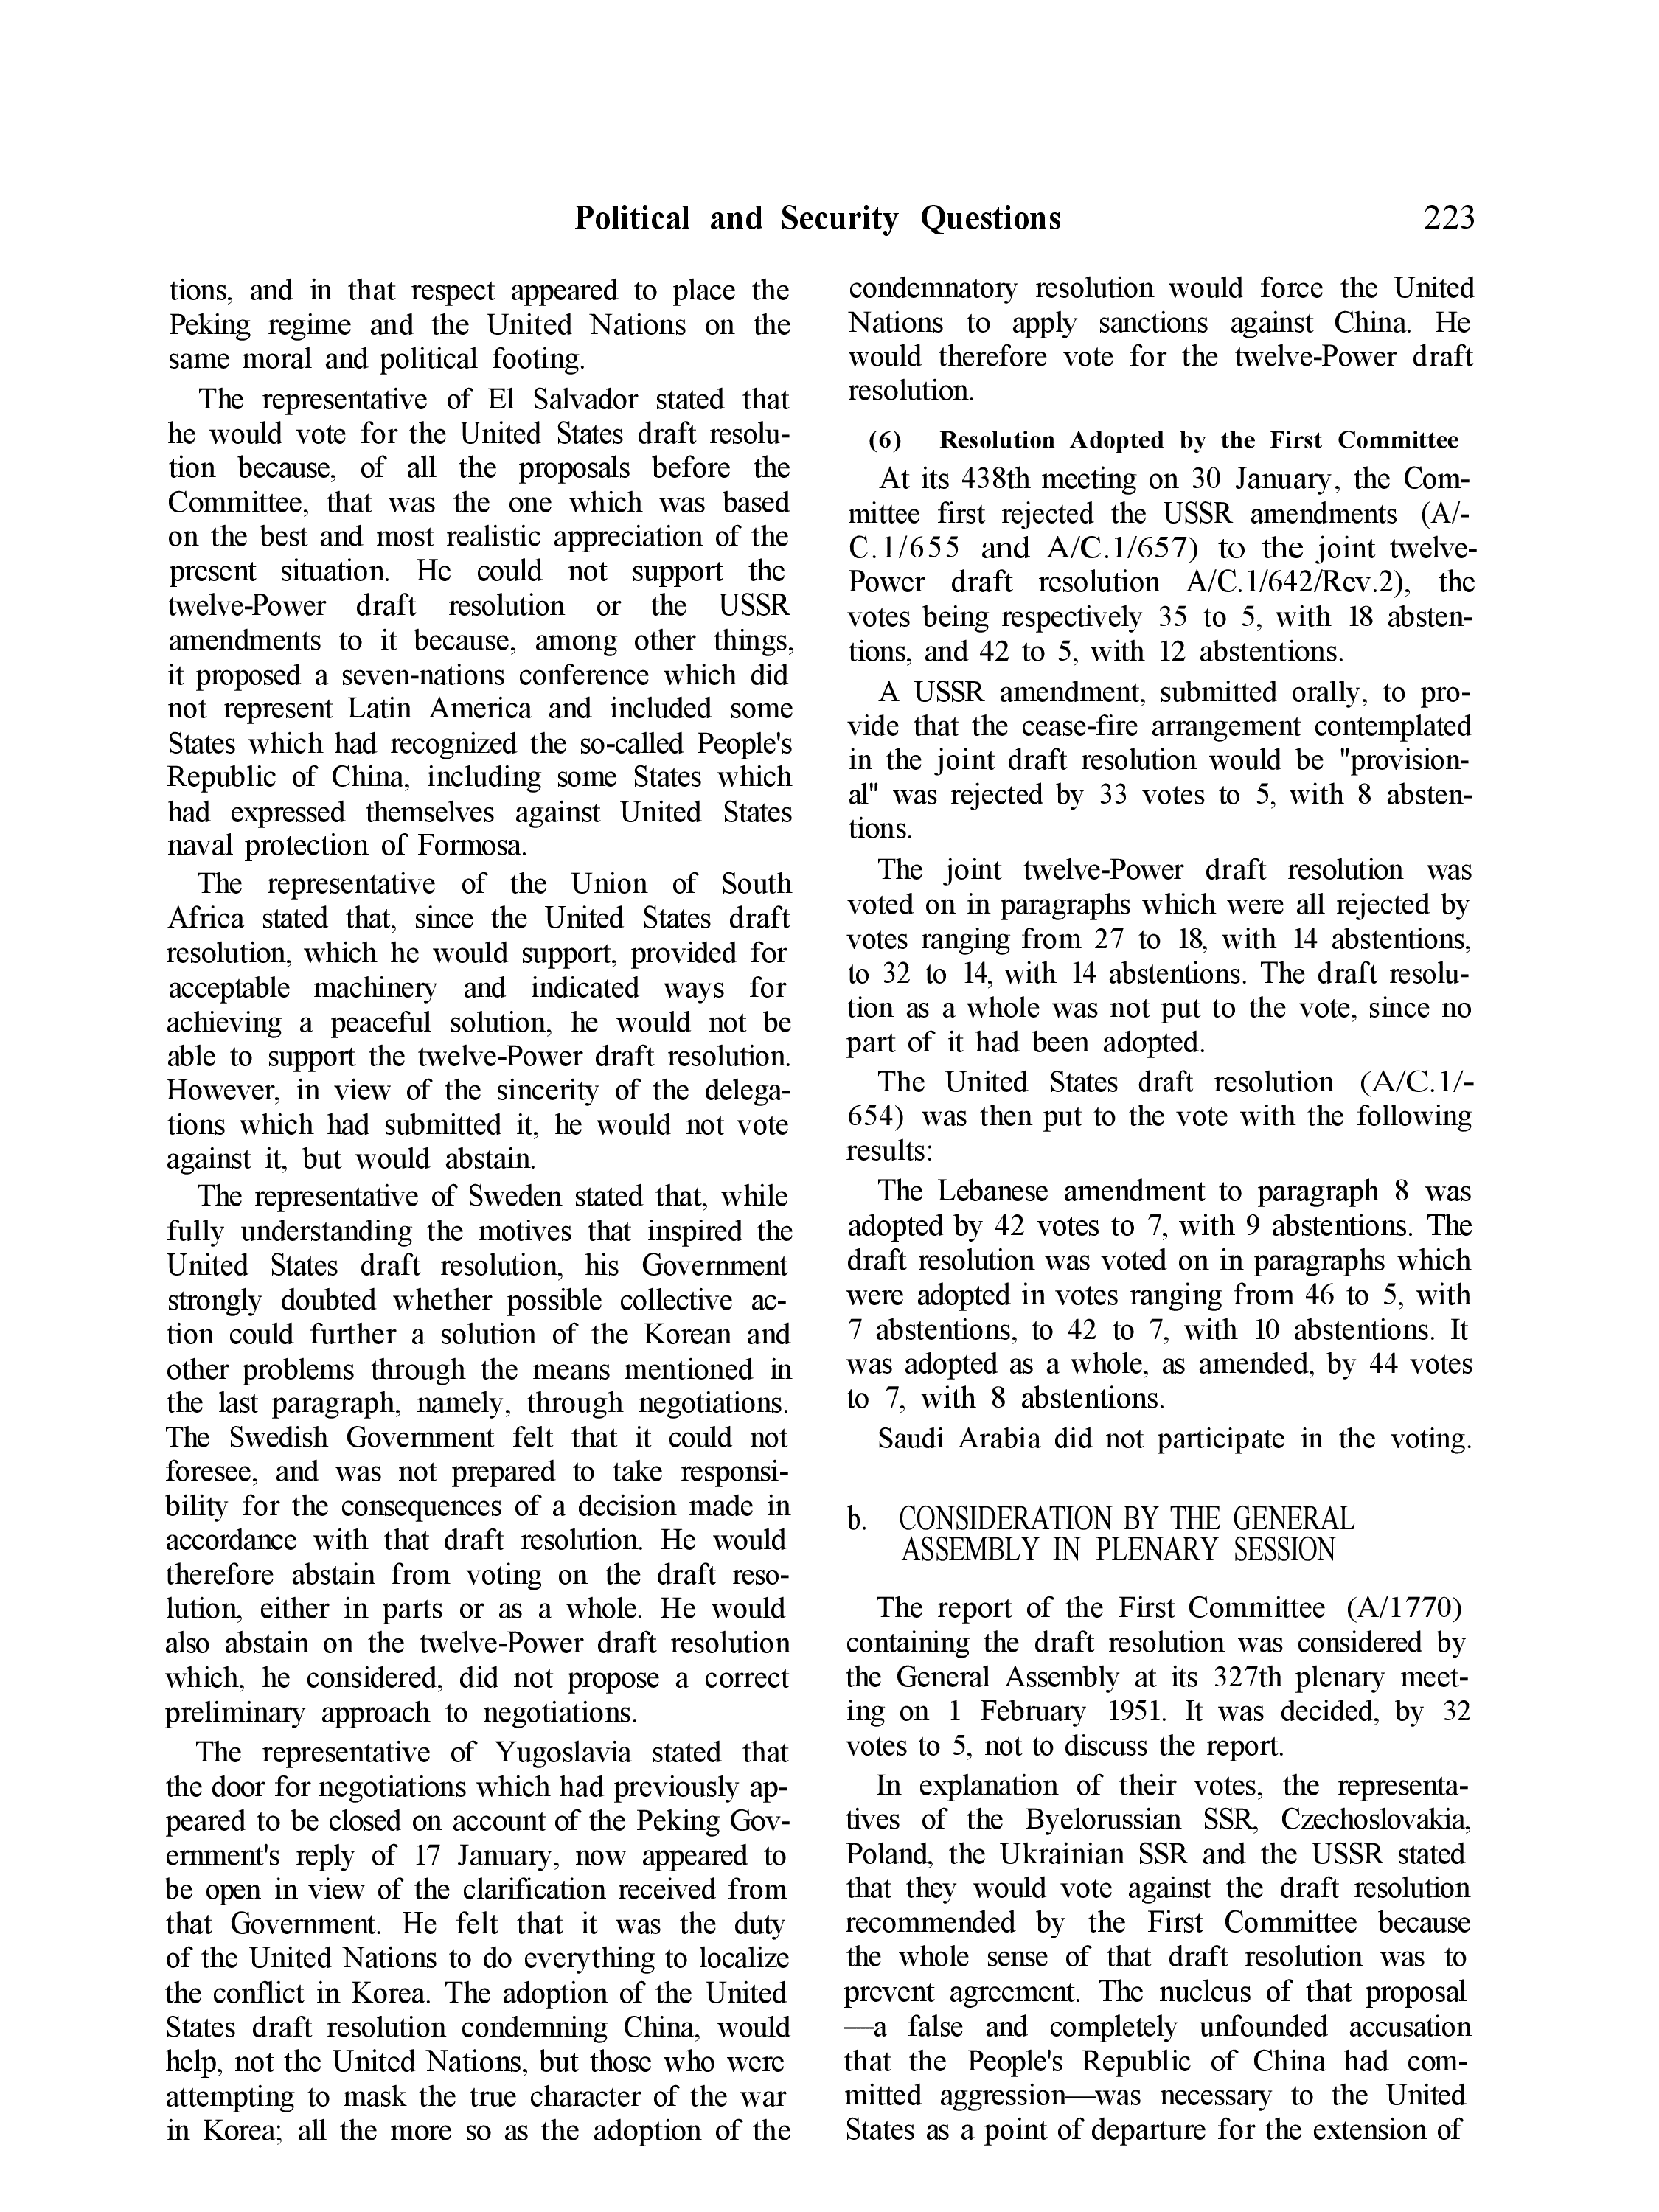 YUN Volume_Page 1951_233